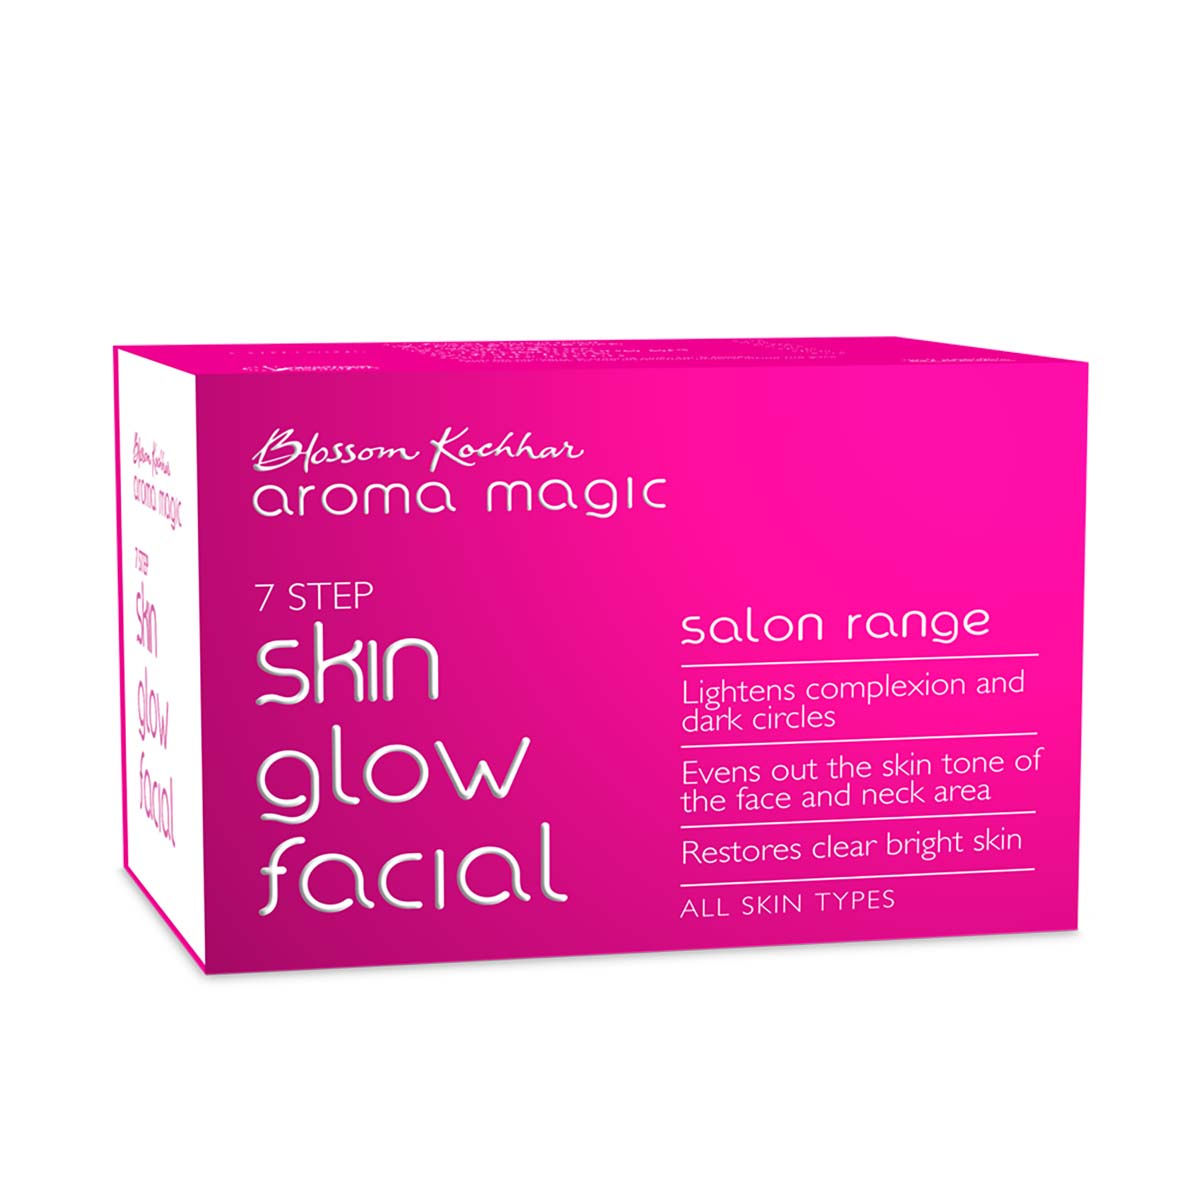 Aroma Magic 7 Step Skin Glow Facial Kit Salon Range (All Skin Types)